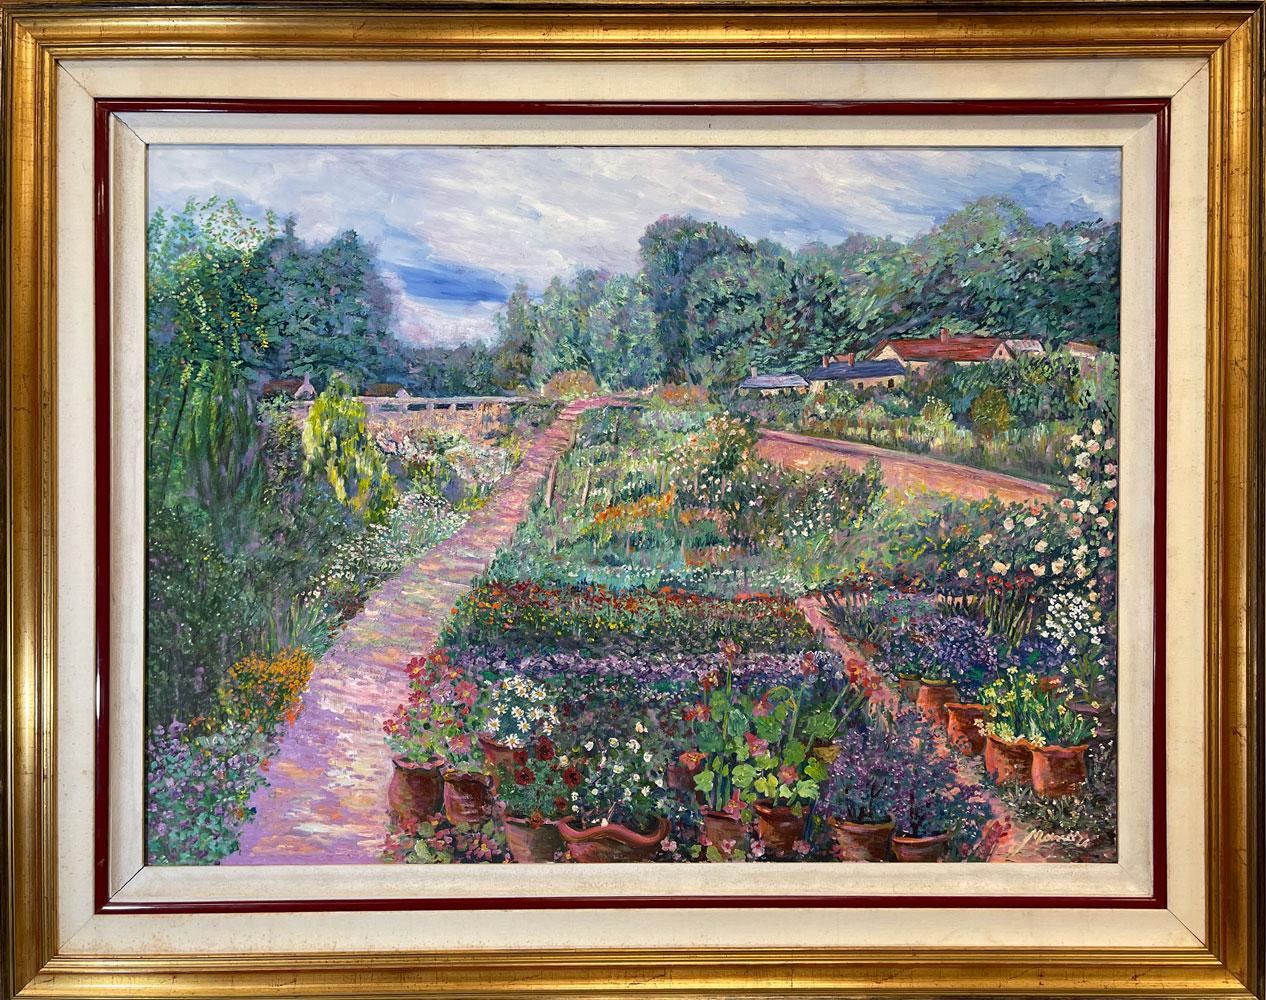 Manor Shadian Landscape Painting - Pink Path Through Garden - Original Oil